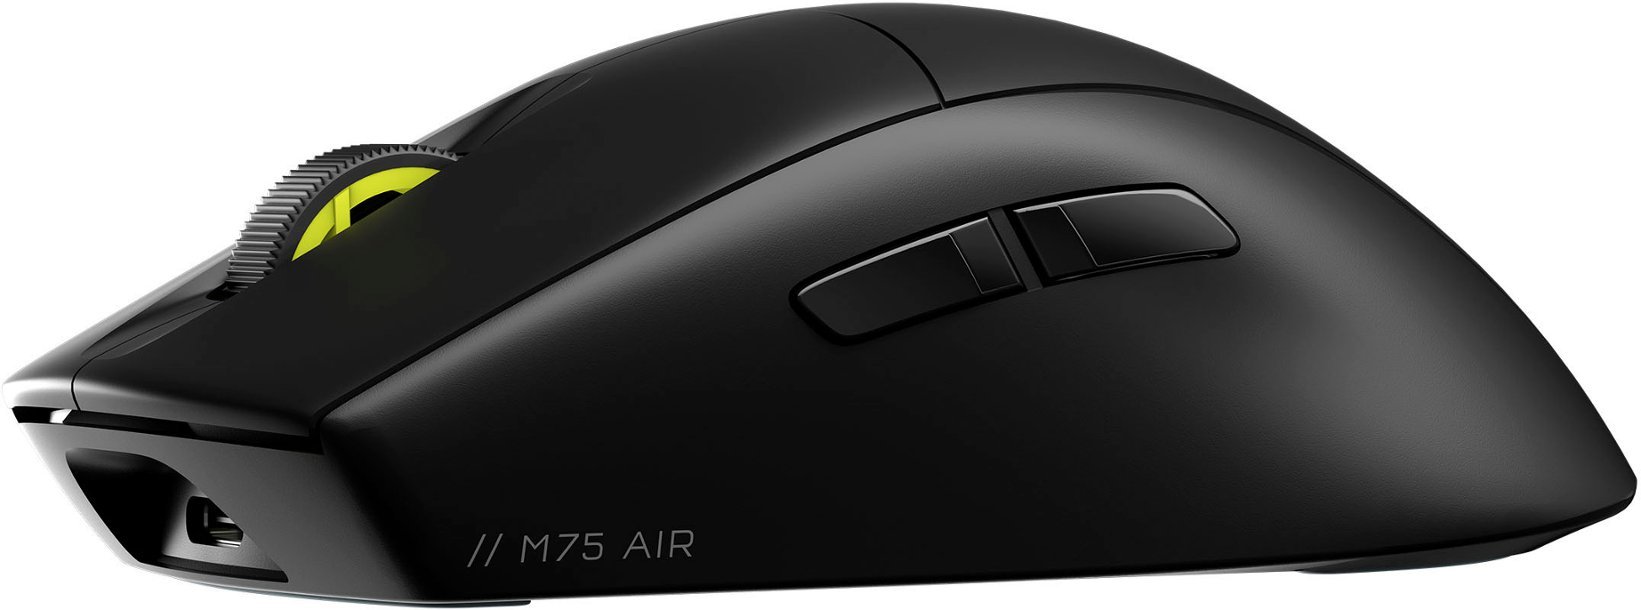 Corsair M75 AIR Wireless Ultra Lightweight Gaming Mouse (Black) $70